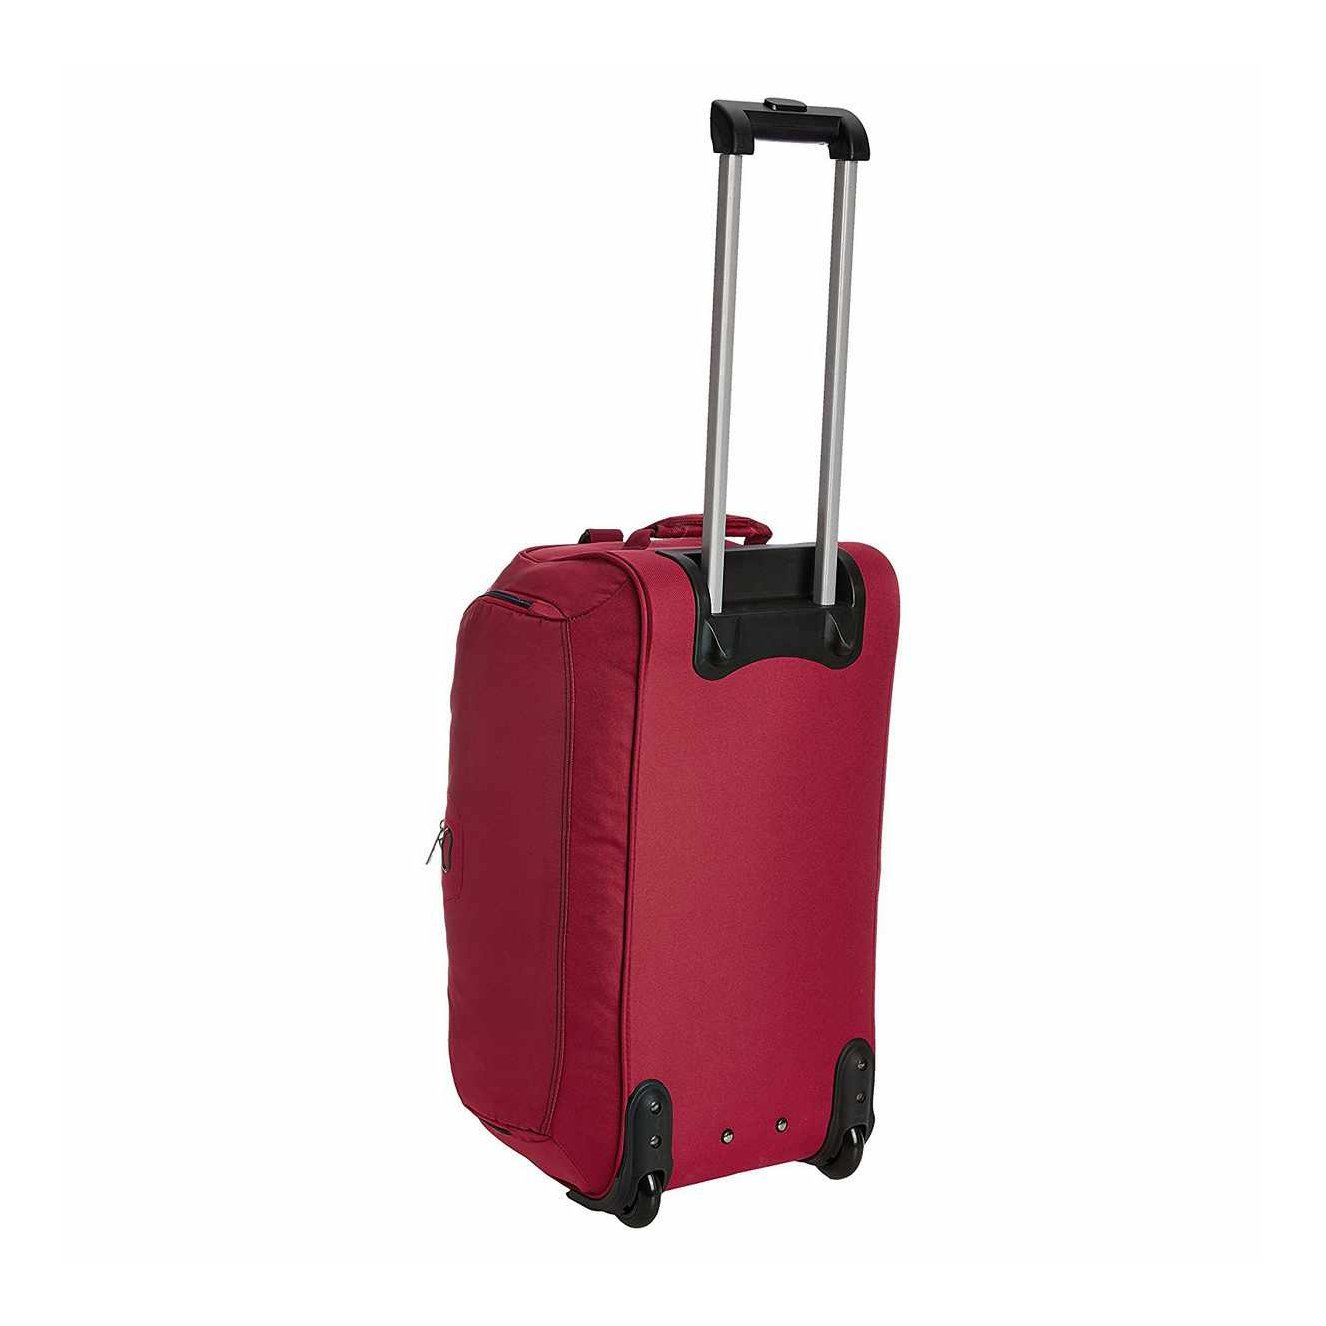 Remember Duffle Travel Bag - Red